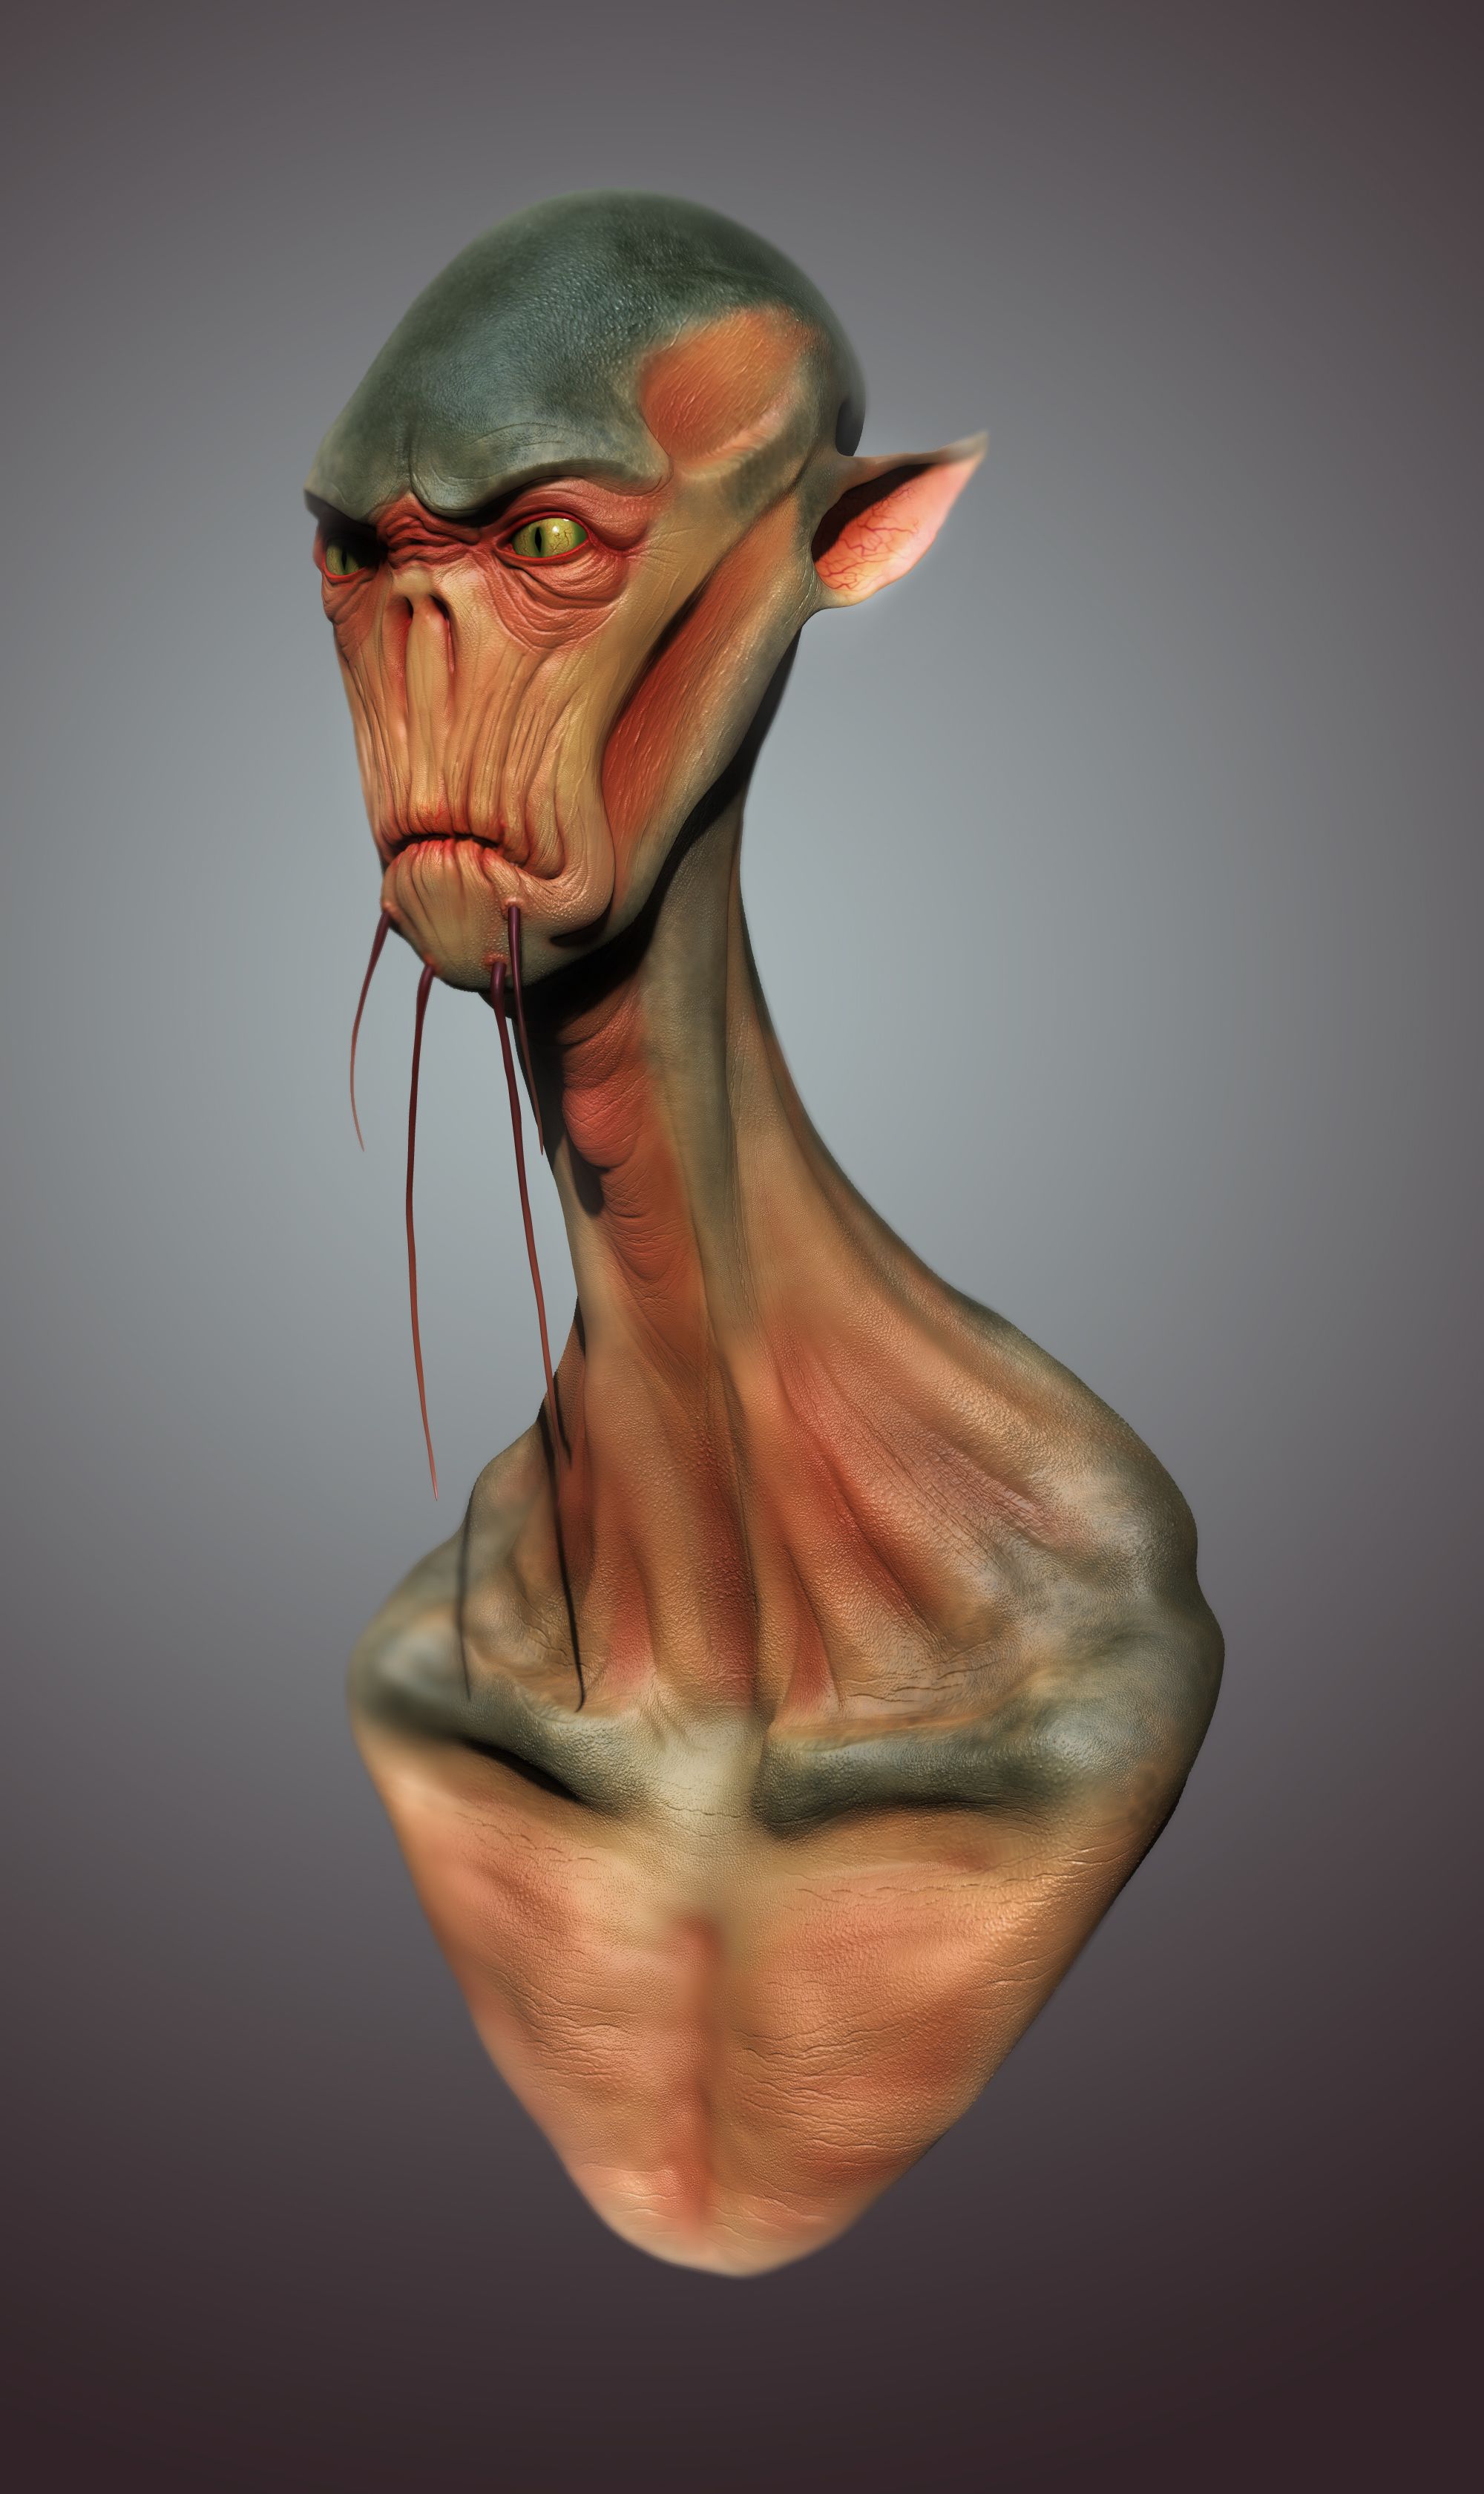 catfish inspired alien long neck | Elias Leonard CG work | Pinterest ...